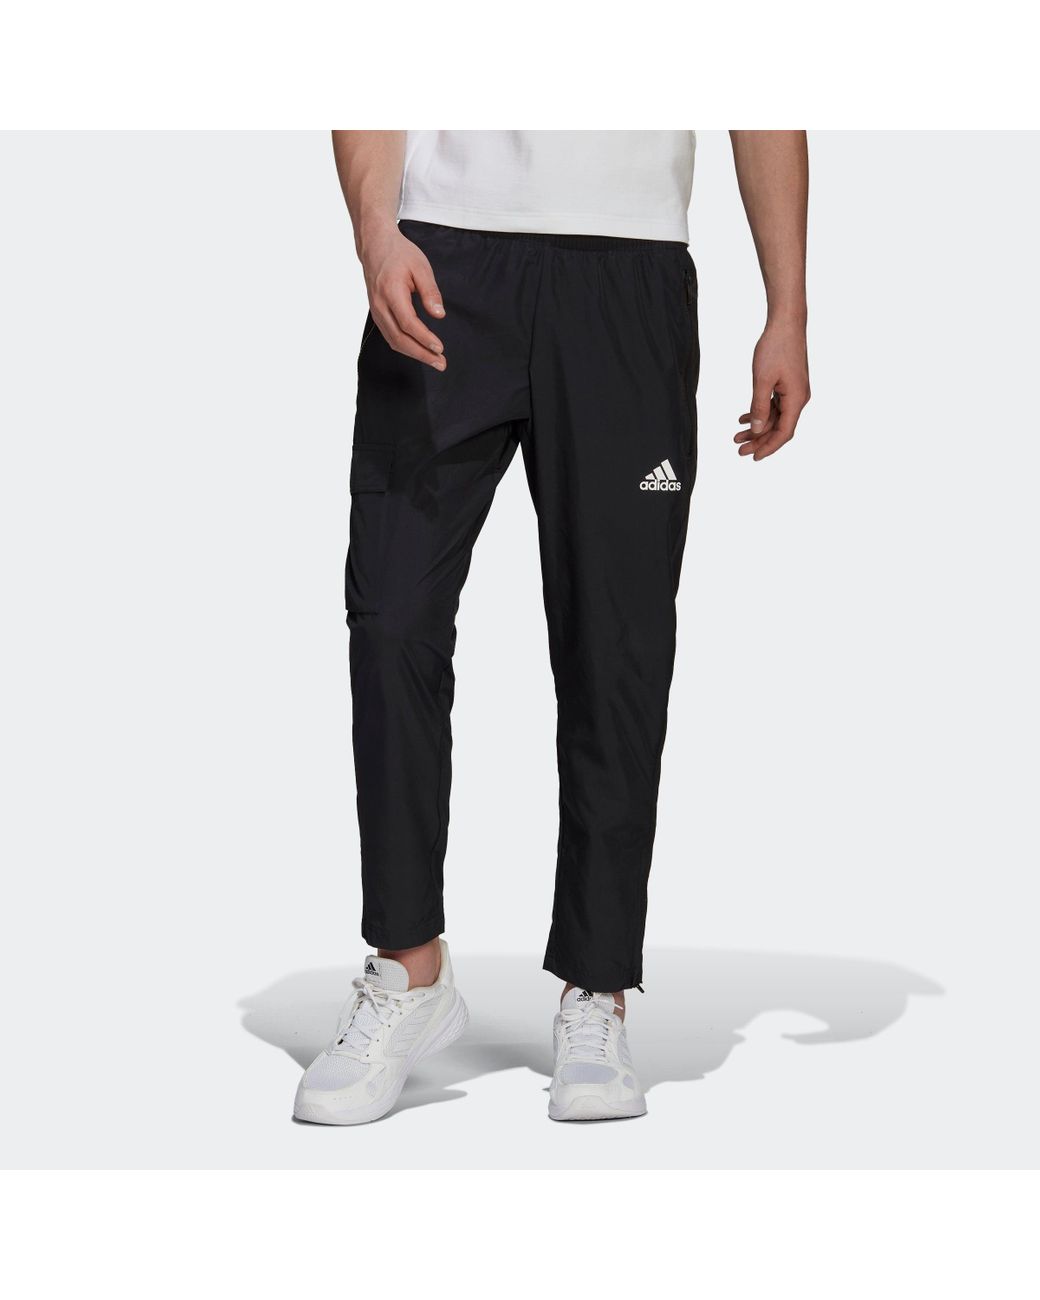 adidas Essentials Brandlove 7/8 Woven Pants in Black for Men | Lyst